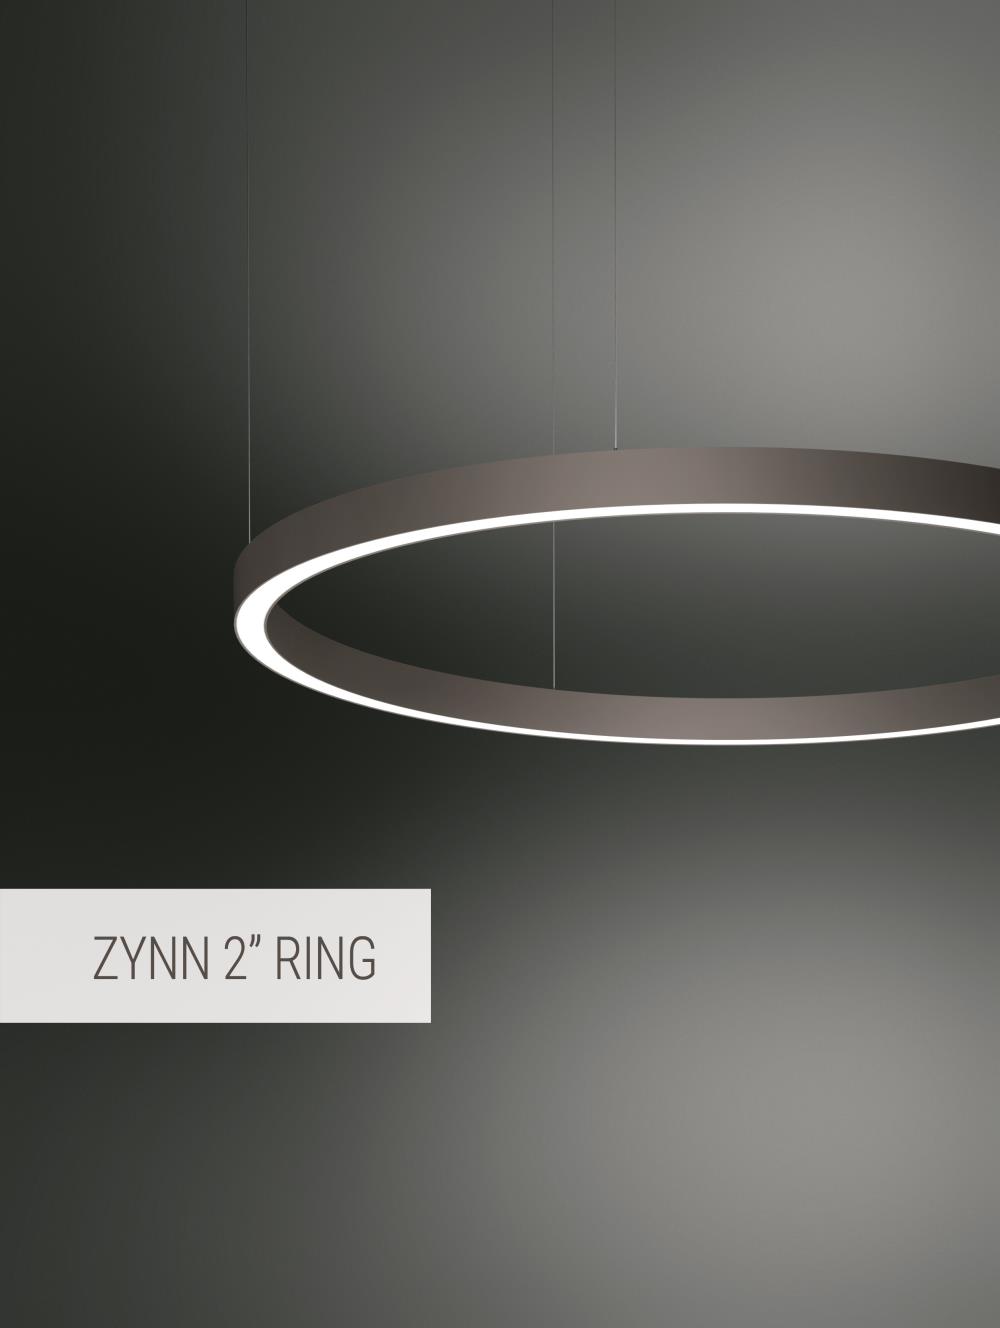 Zynn 2" Ring - Silhouette